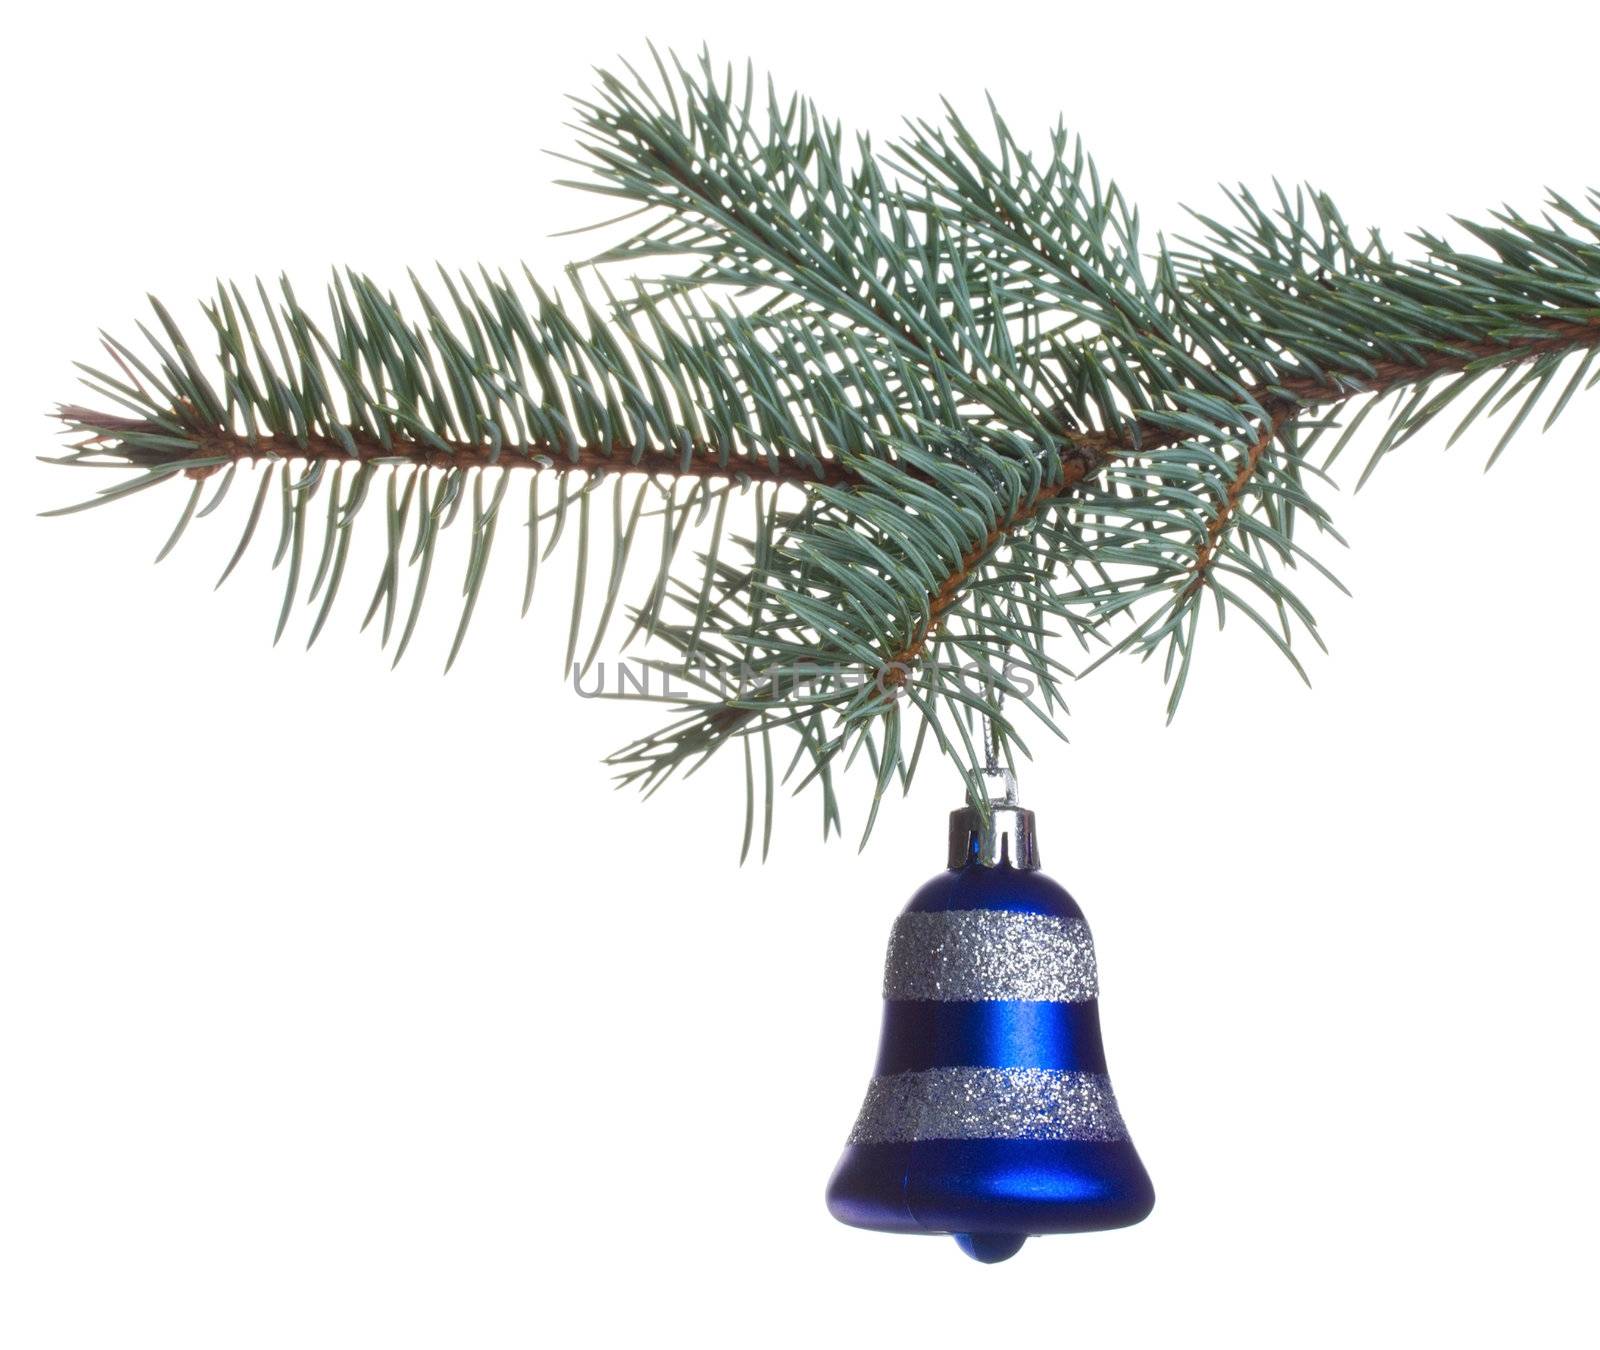 blue bell on fir branch by Alekcey